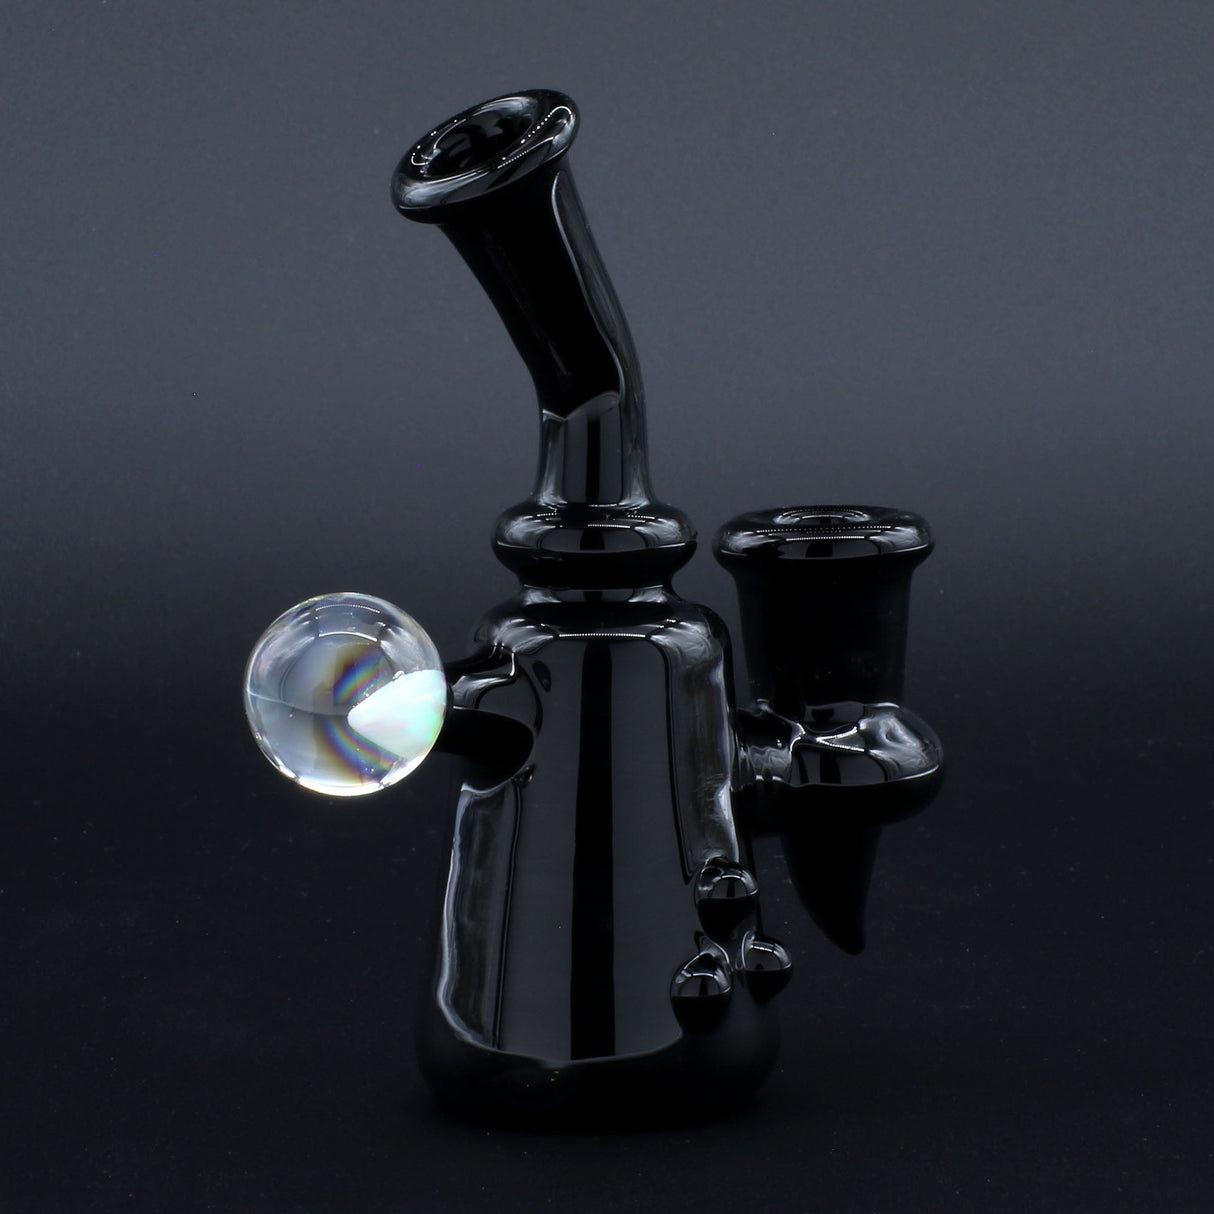 Clayball Glass "Black Jack" Heady Sherlock Dab Set, 10" height, 14mm female joint, on black background